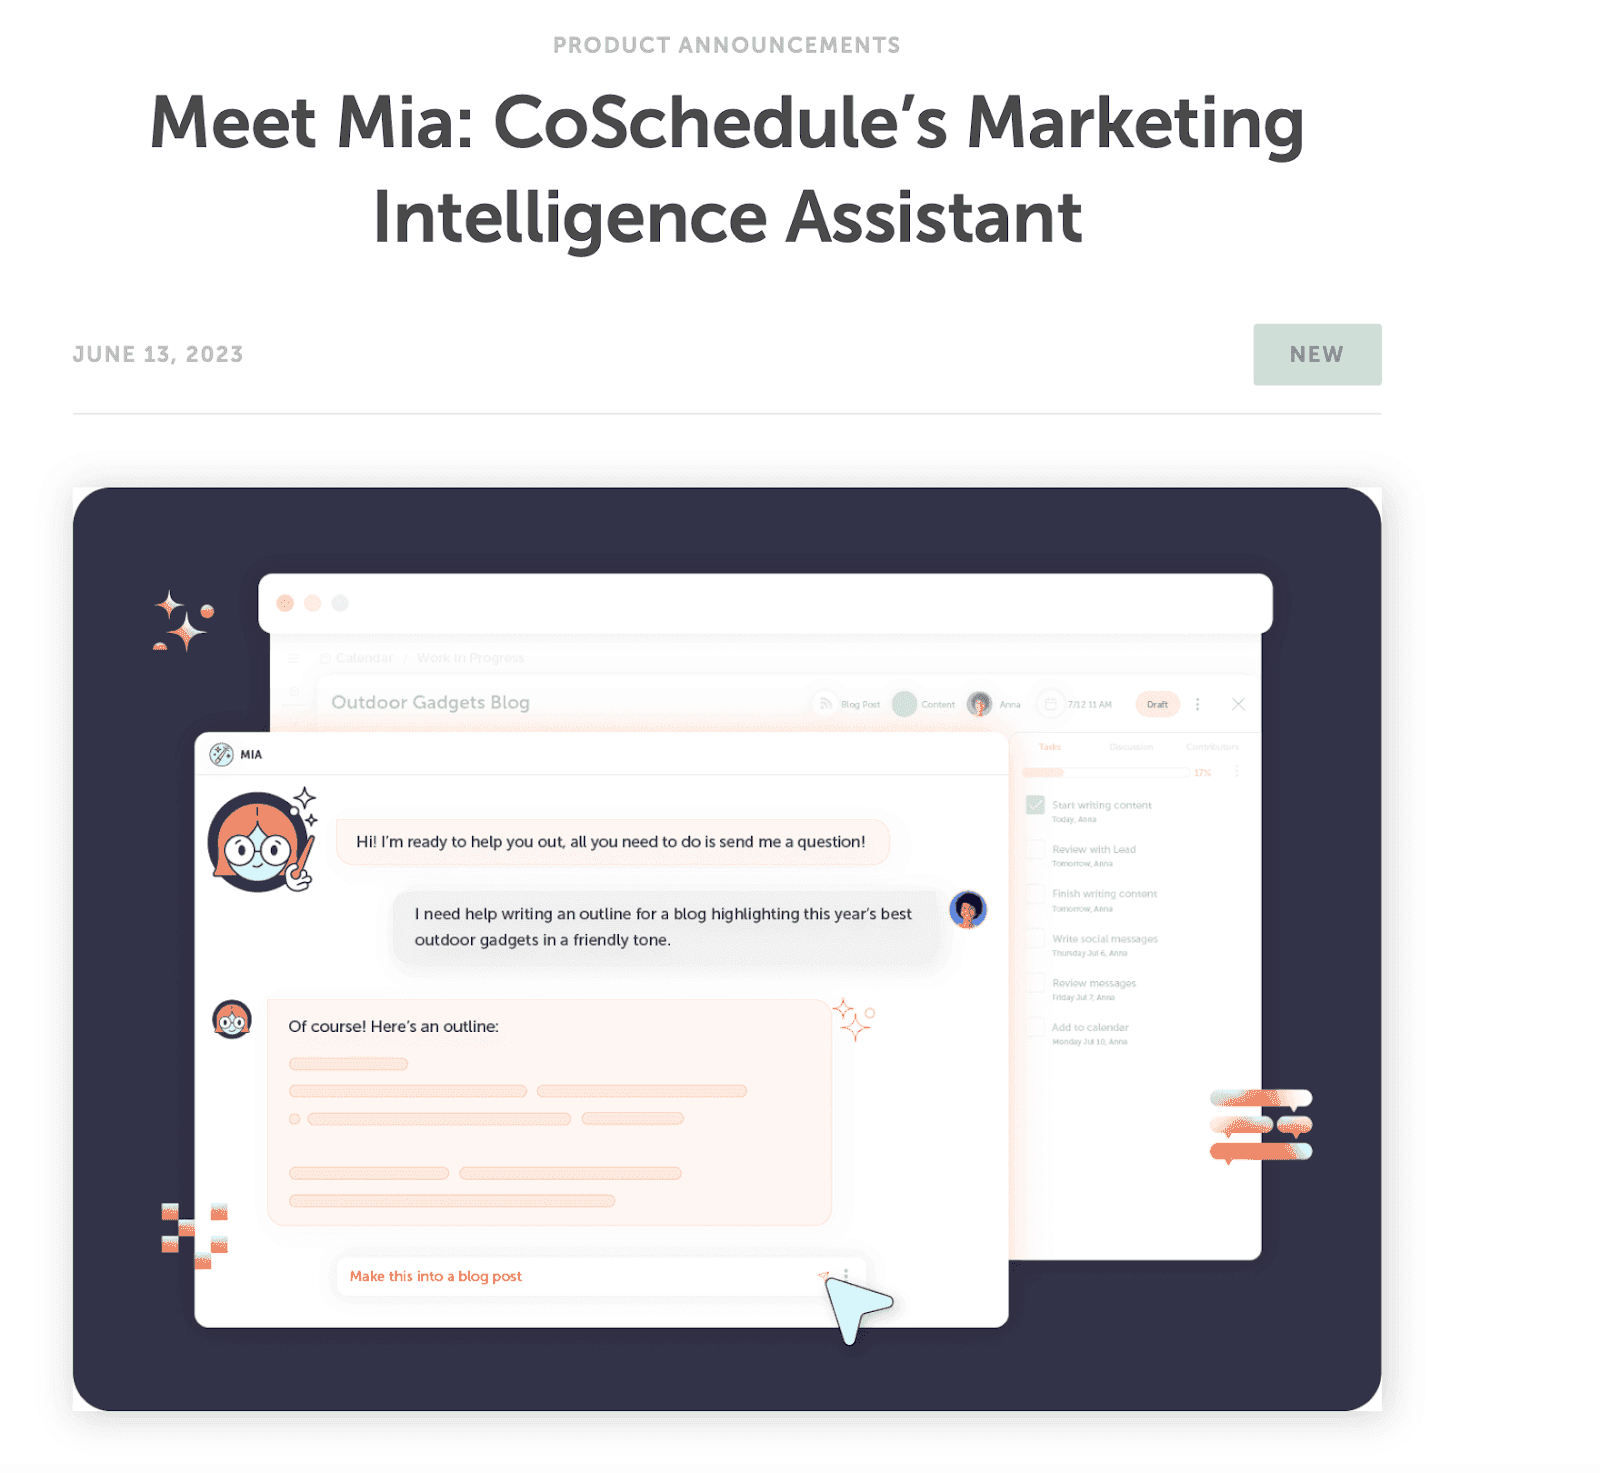 Meet Mia: CoSchedule's Marketing Intelligence Assistant